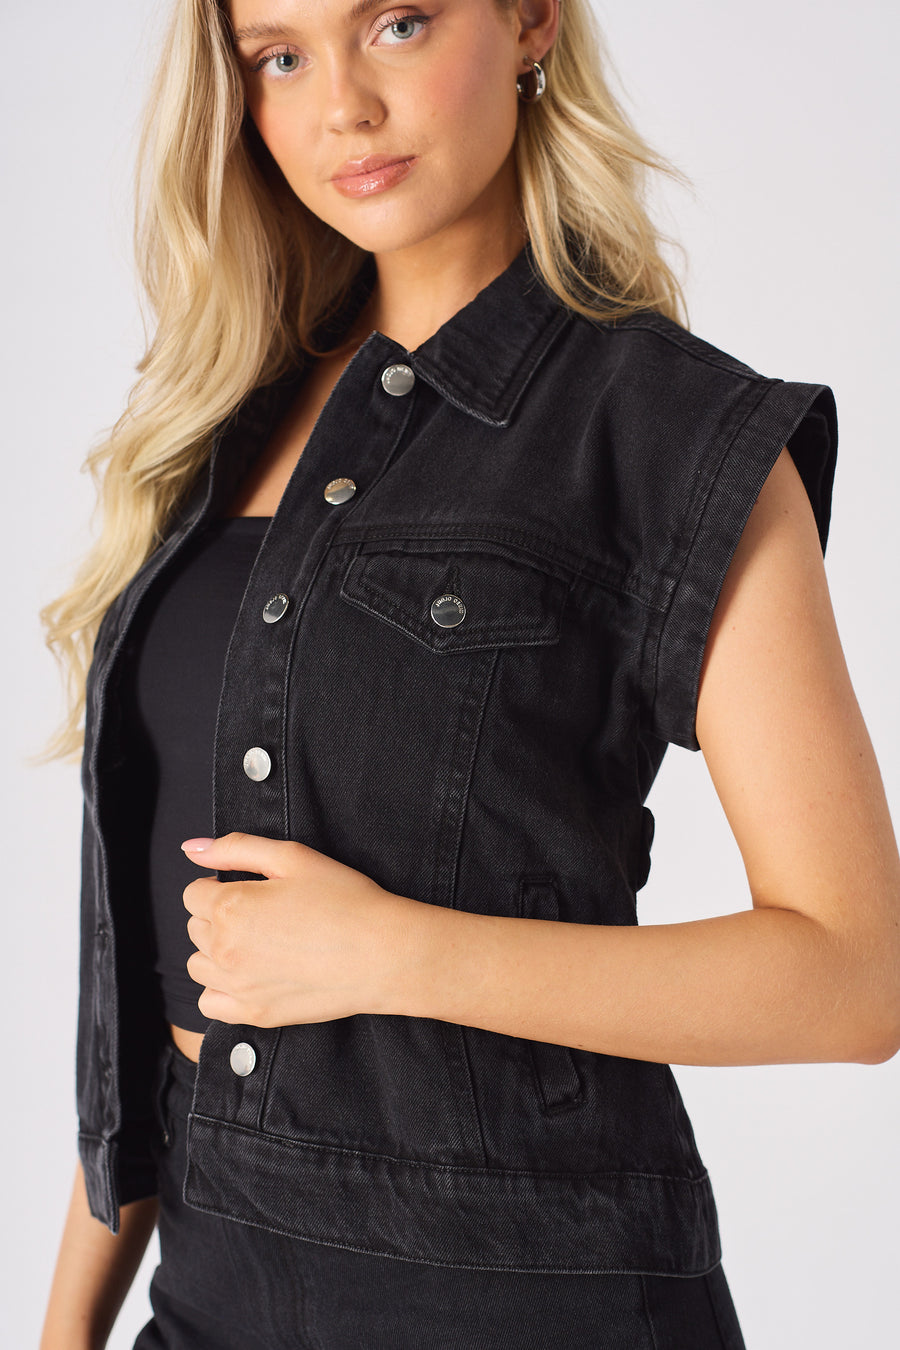 Transeasonal Tapered Removable sleeves Denim Jacket - Black Wash